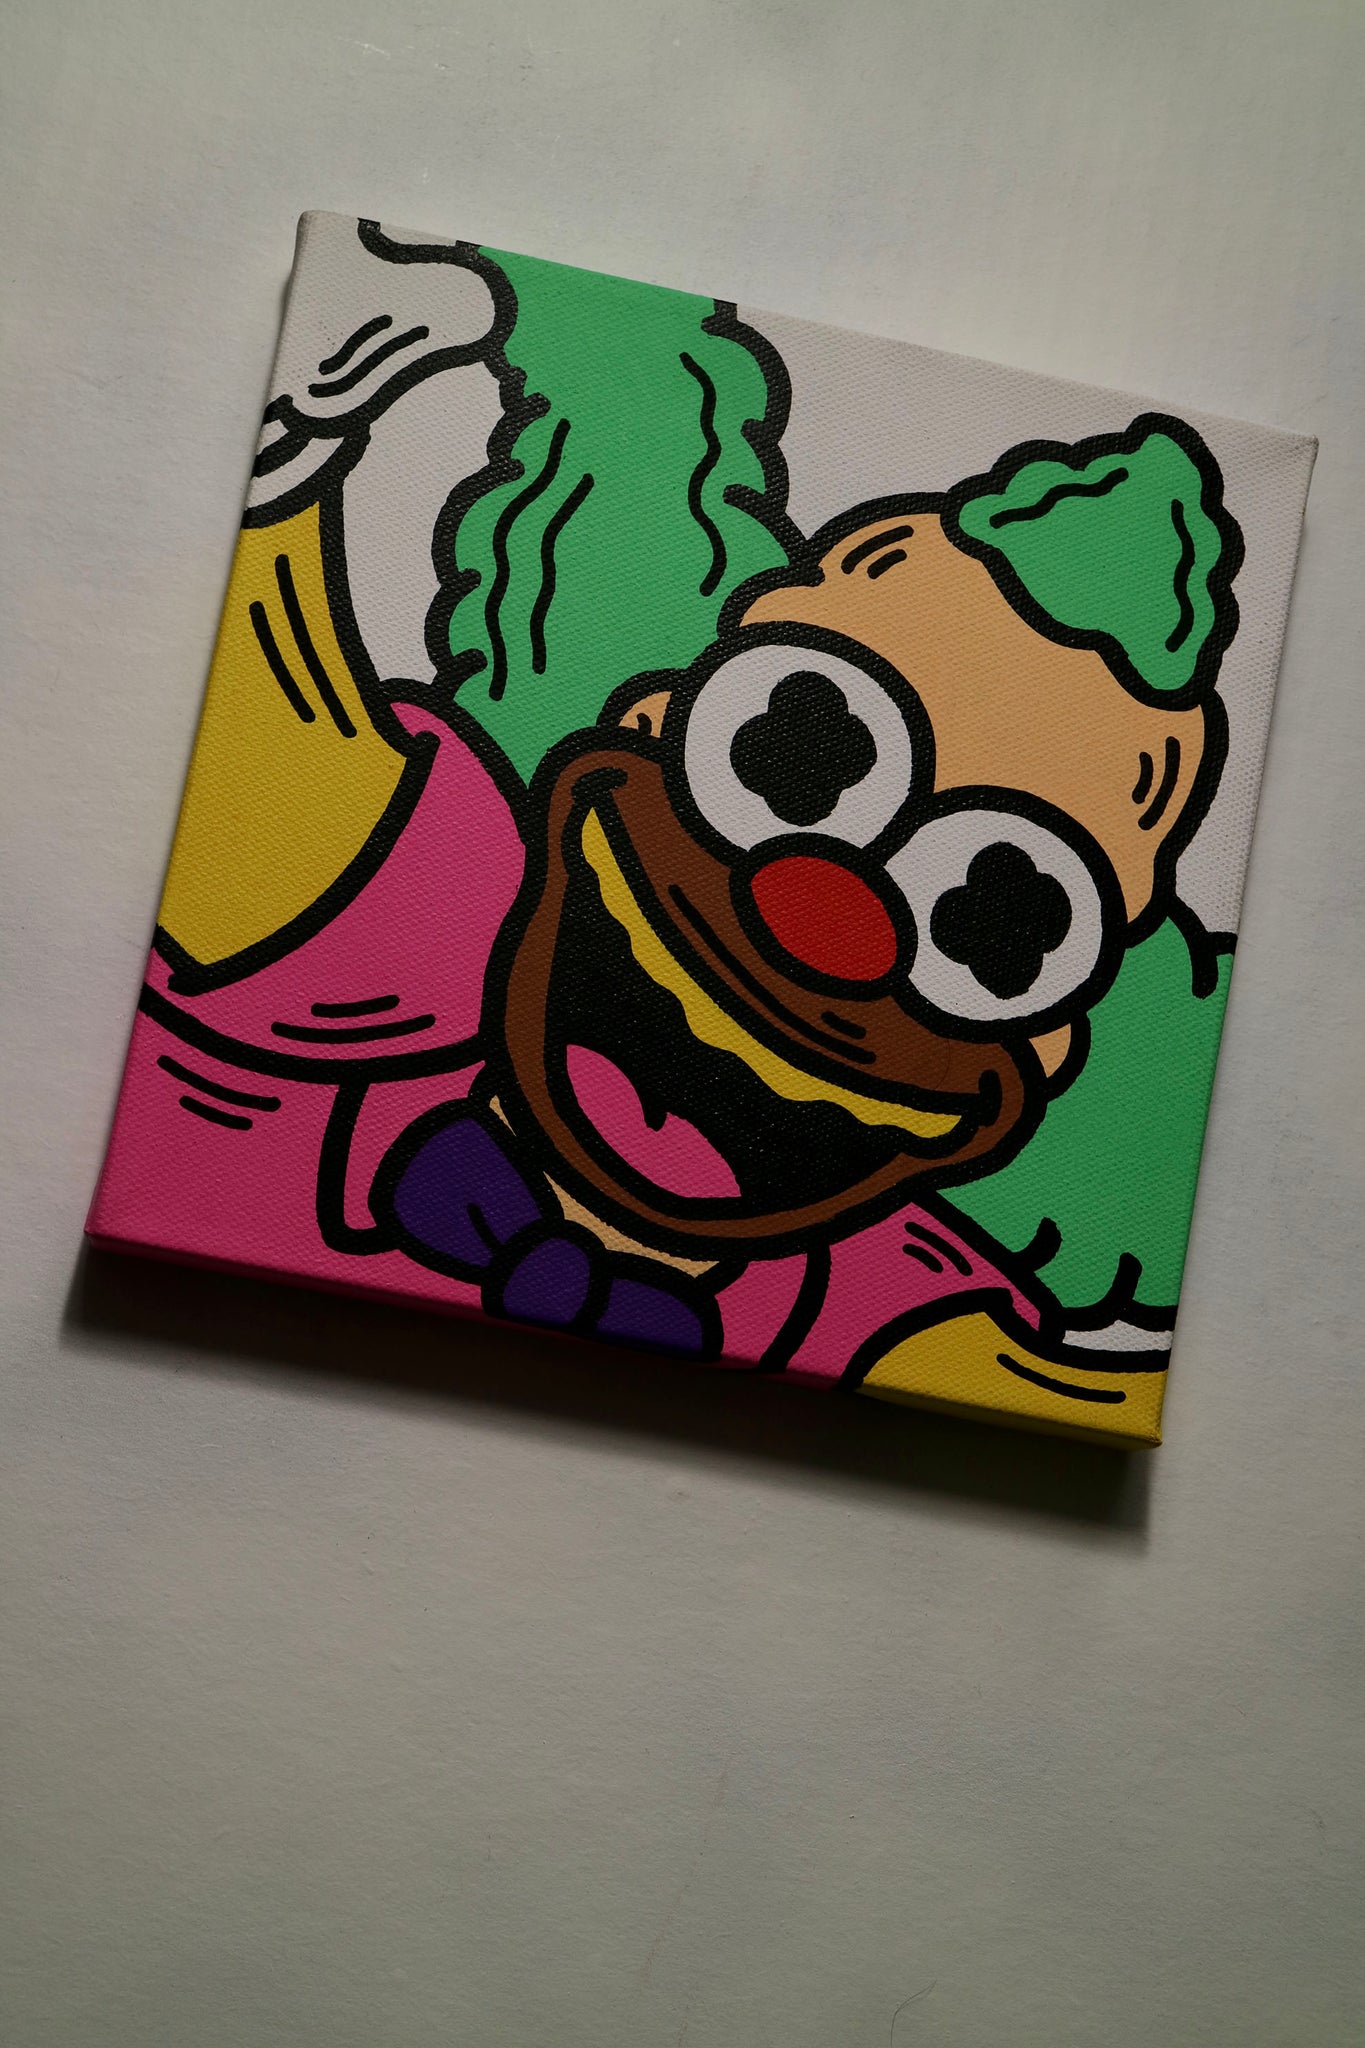 "Joker x Krusty" 2020 Original Artwork